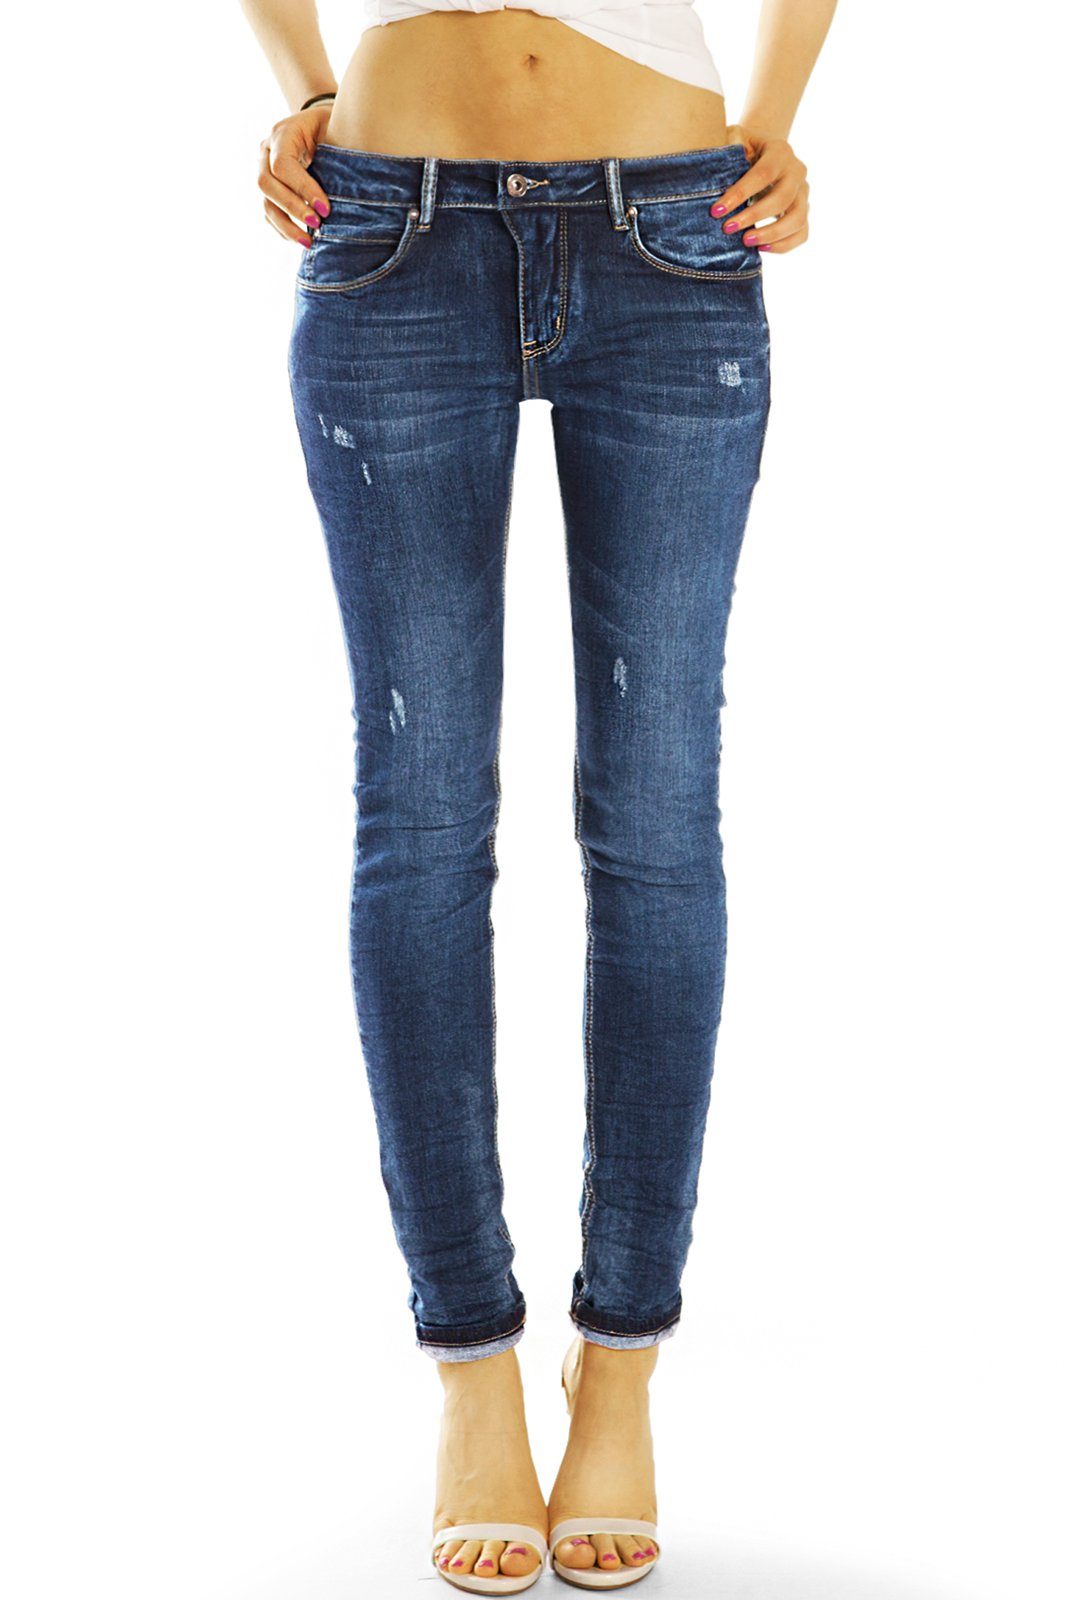 be styled Low-rise-Jeans Skinny Röhrenjeans Stretch Fit in dunkelblau  medium / low waist Hosen - Damen - j55L mit Stretch Anteil, 5 Pocket Style